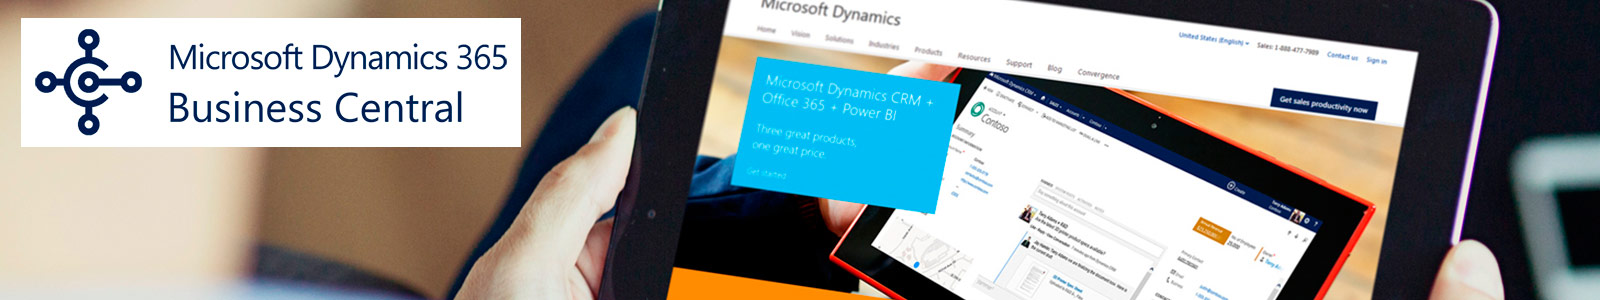 Microsoft Dynamics 365 Business Central.